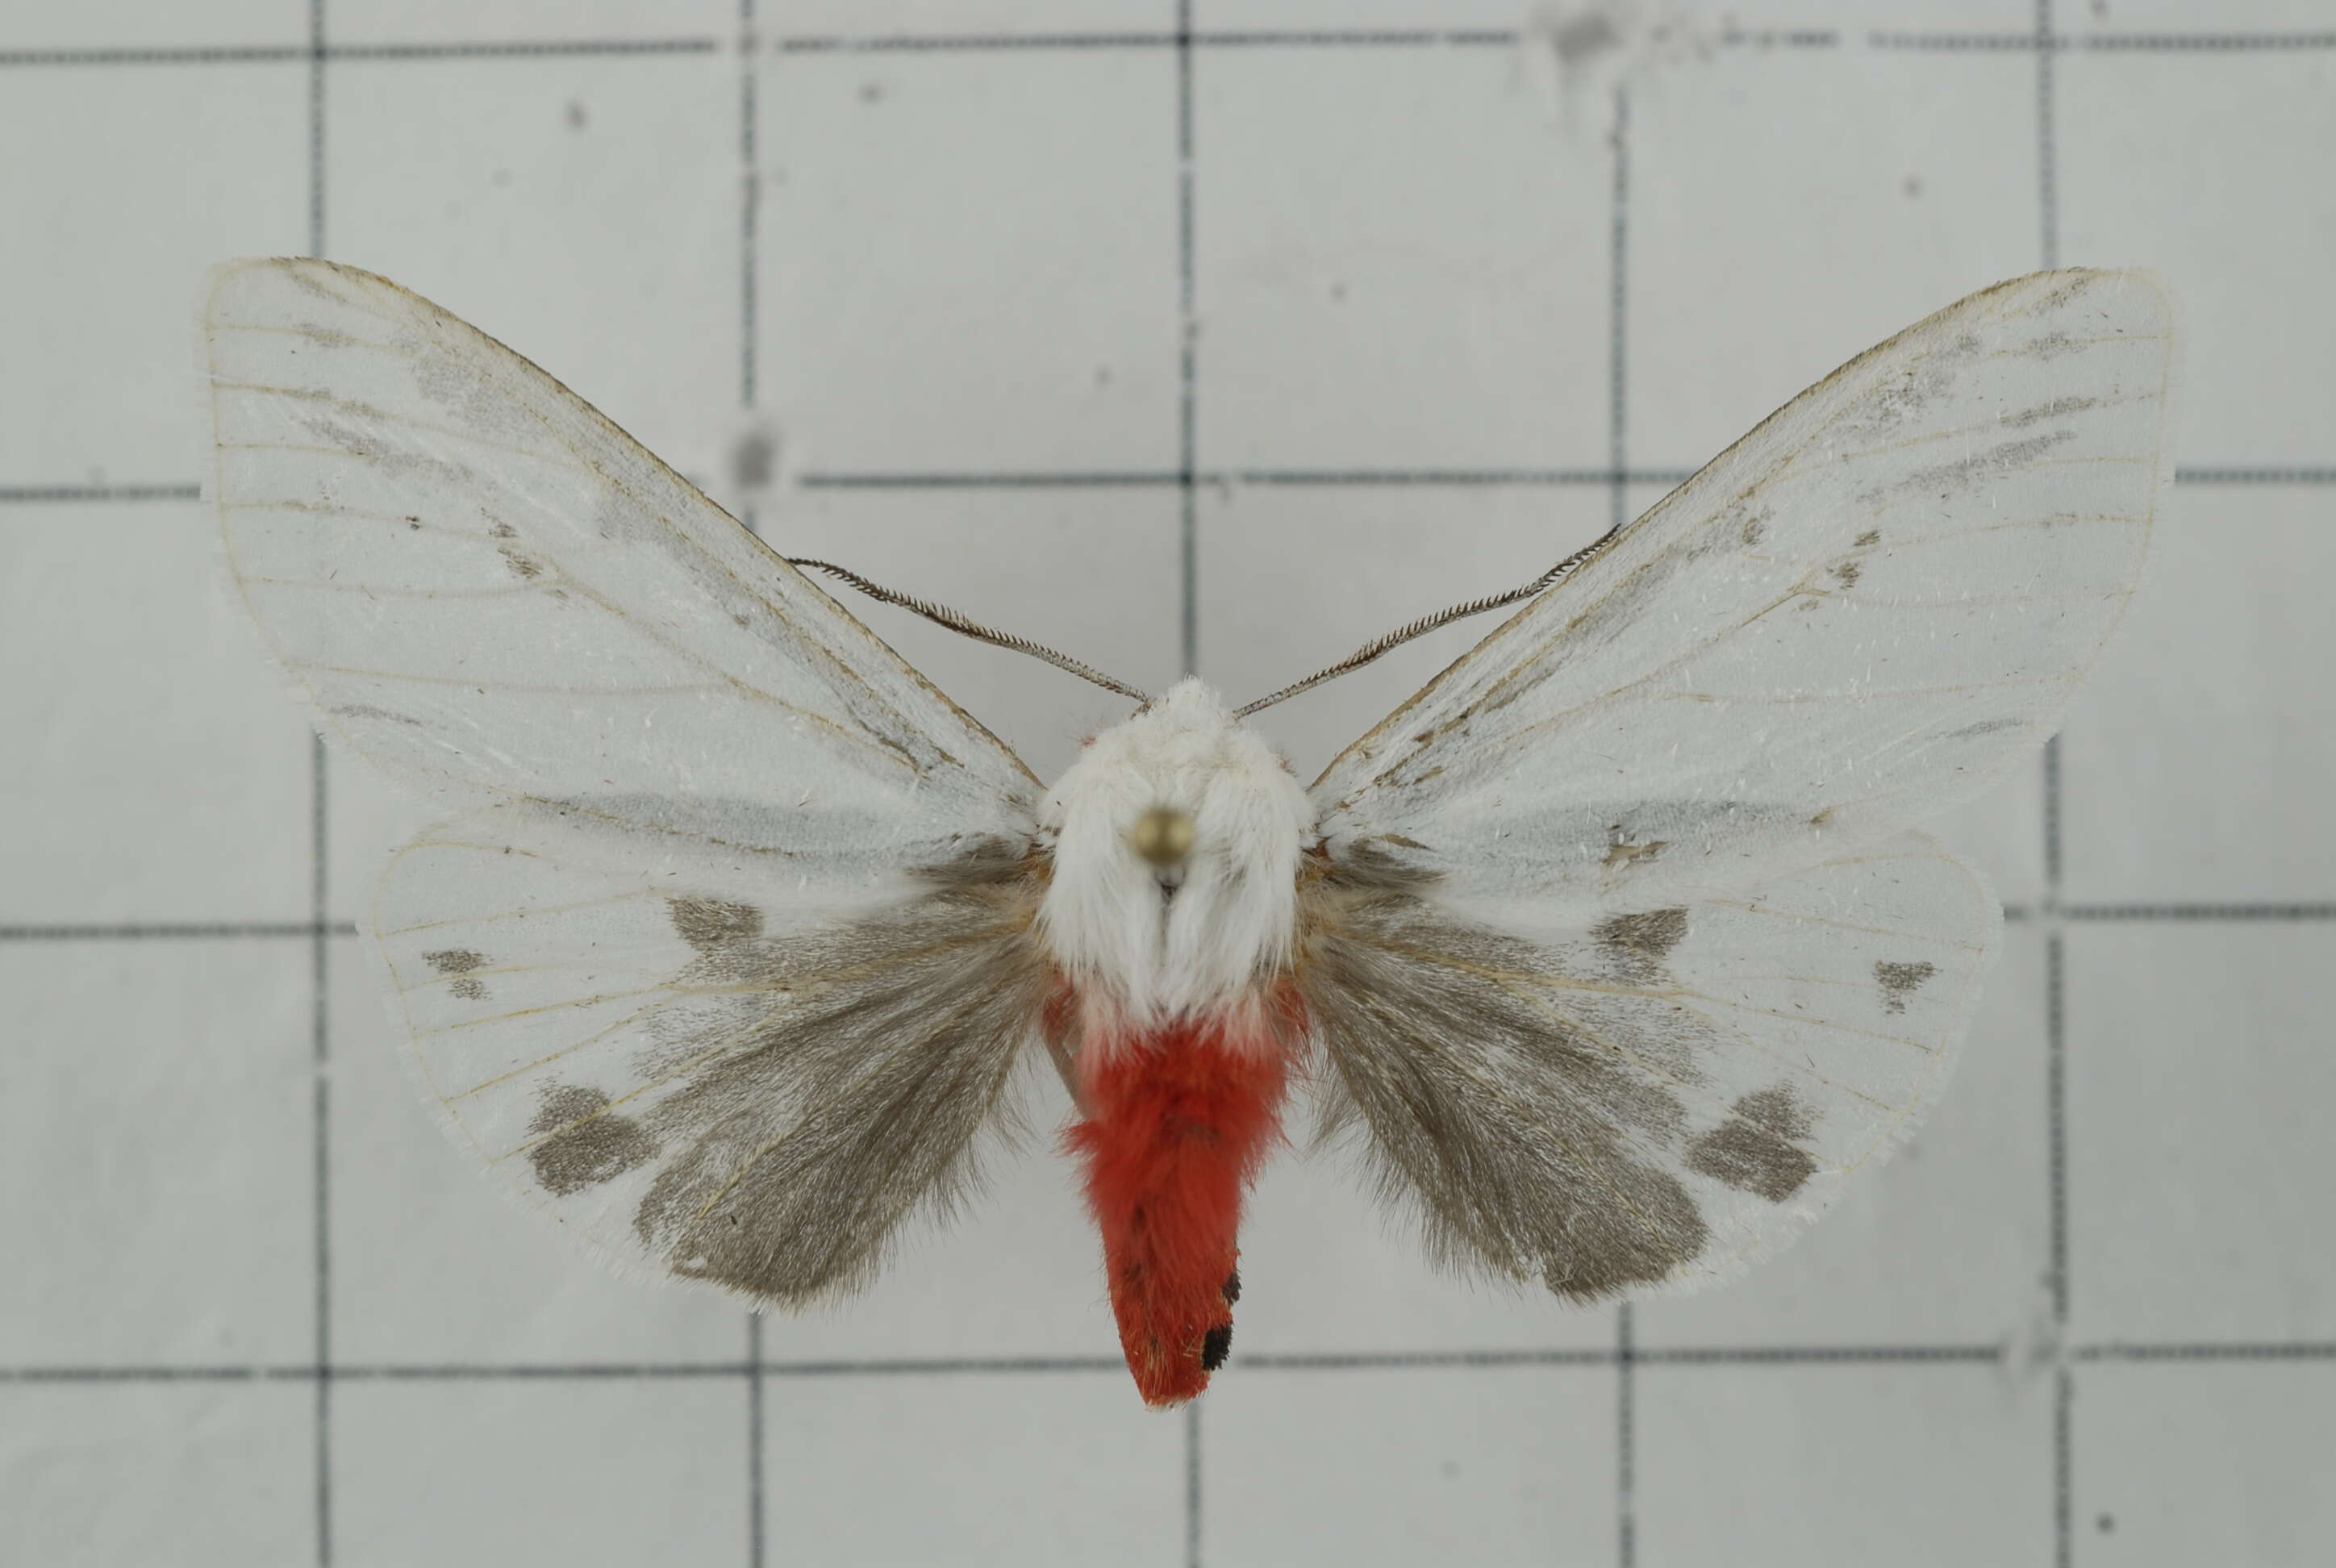 Image of Argyarctia fuscobasalis (Matsumura 1930)